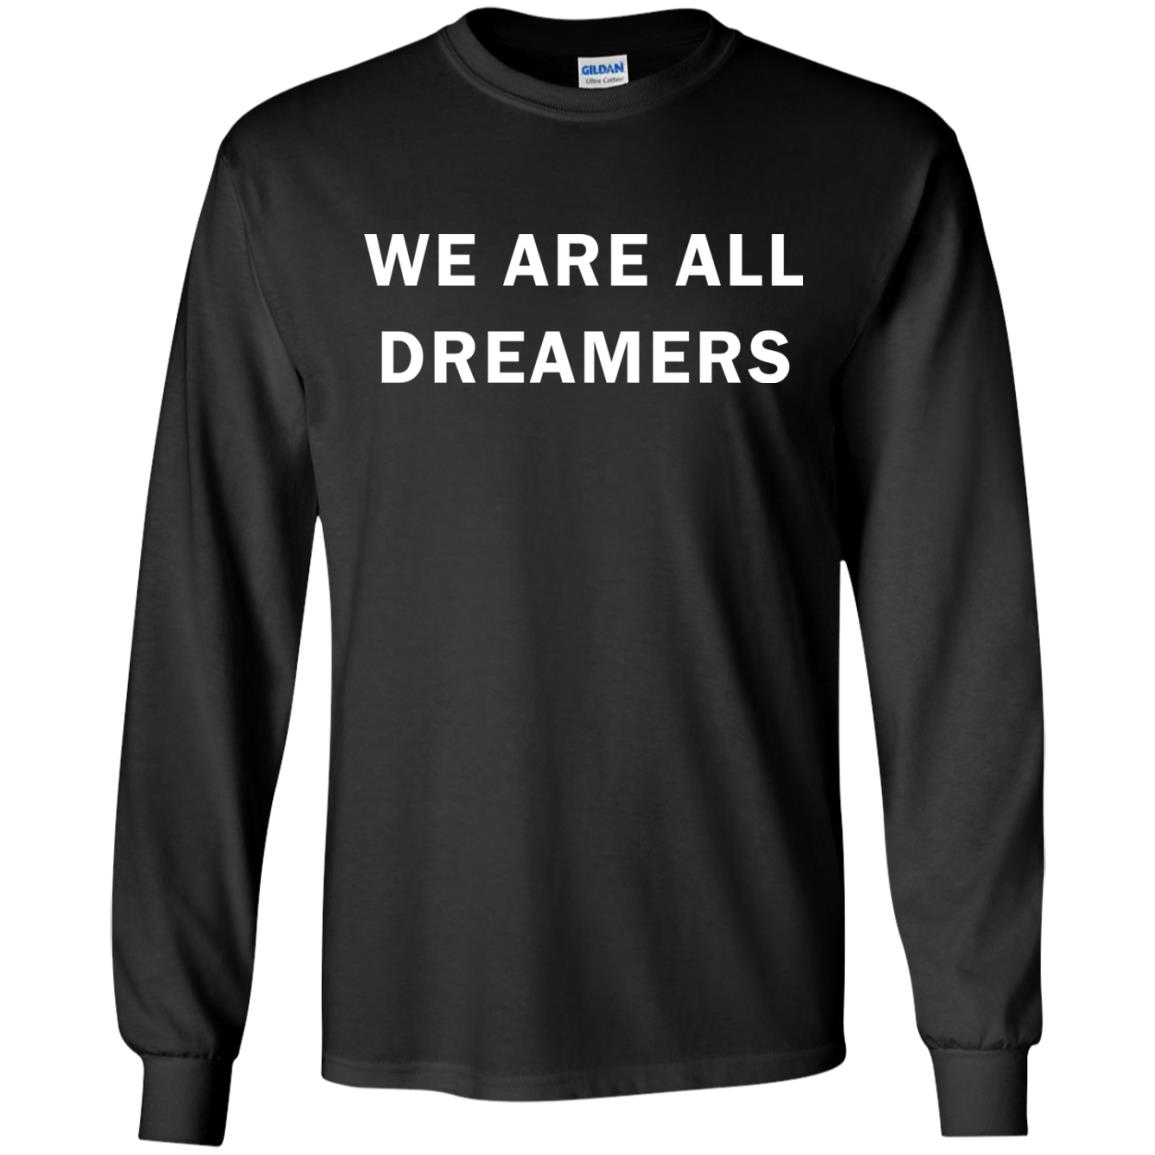 Minka Kelly: We are all dreamers shirt, hoodie - Rockatee